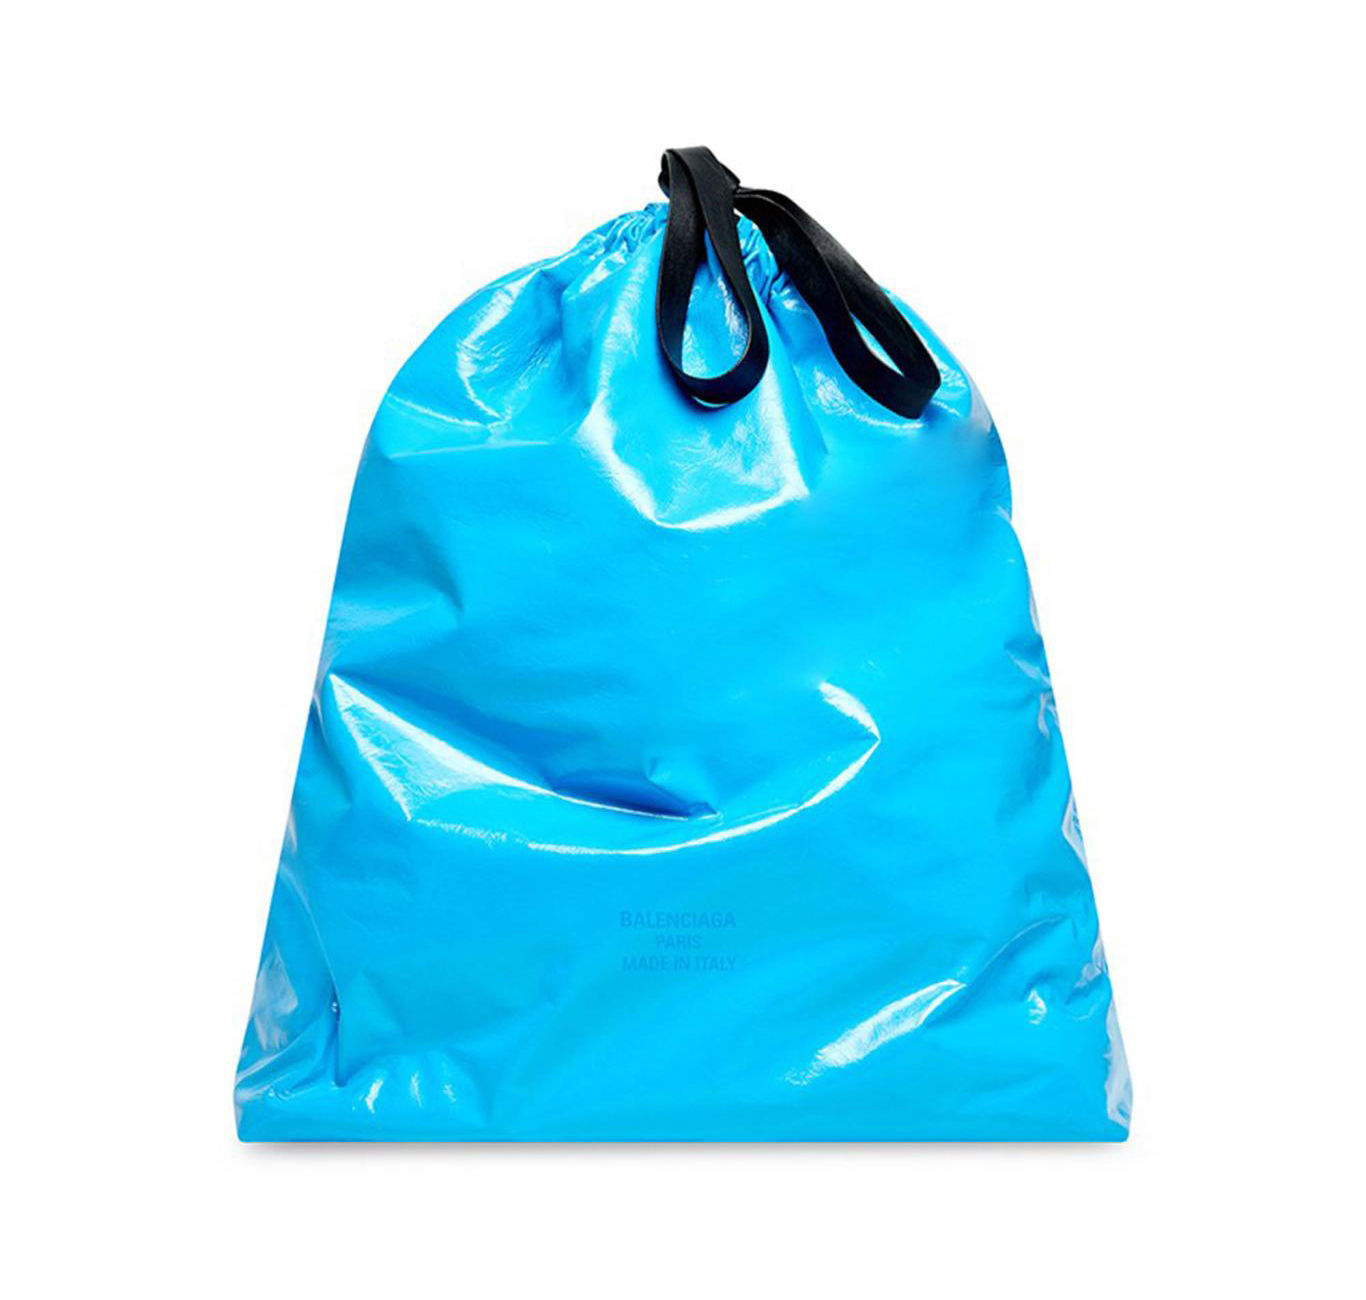 Balenciagas 3000 take on the plastic storage bag  Stuffconz